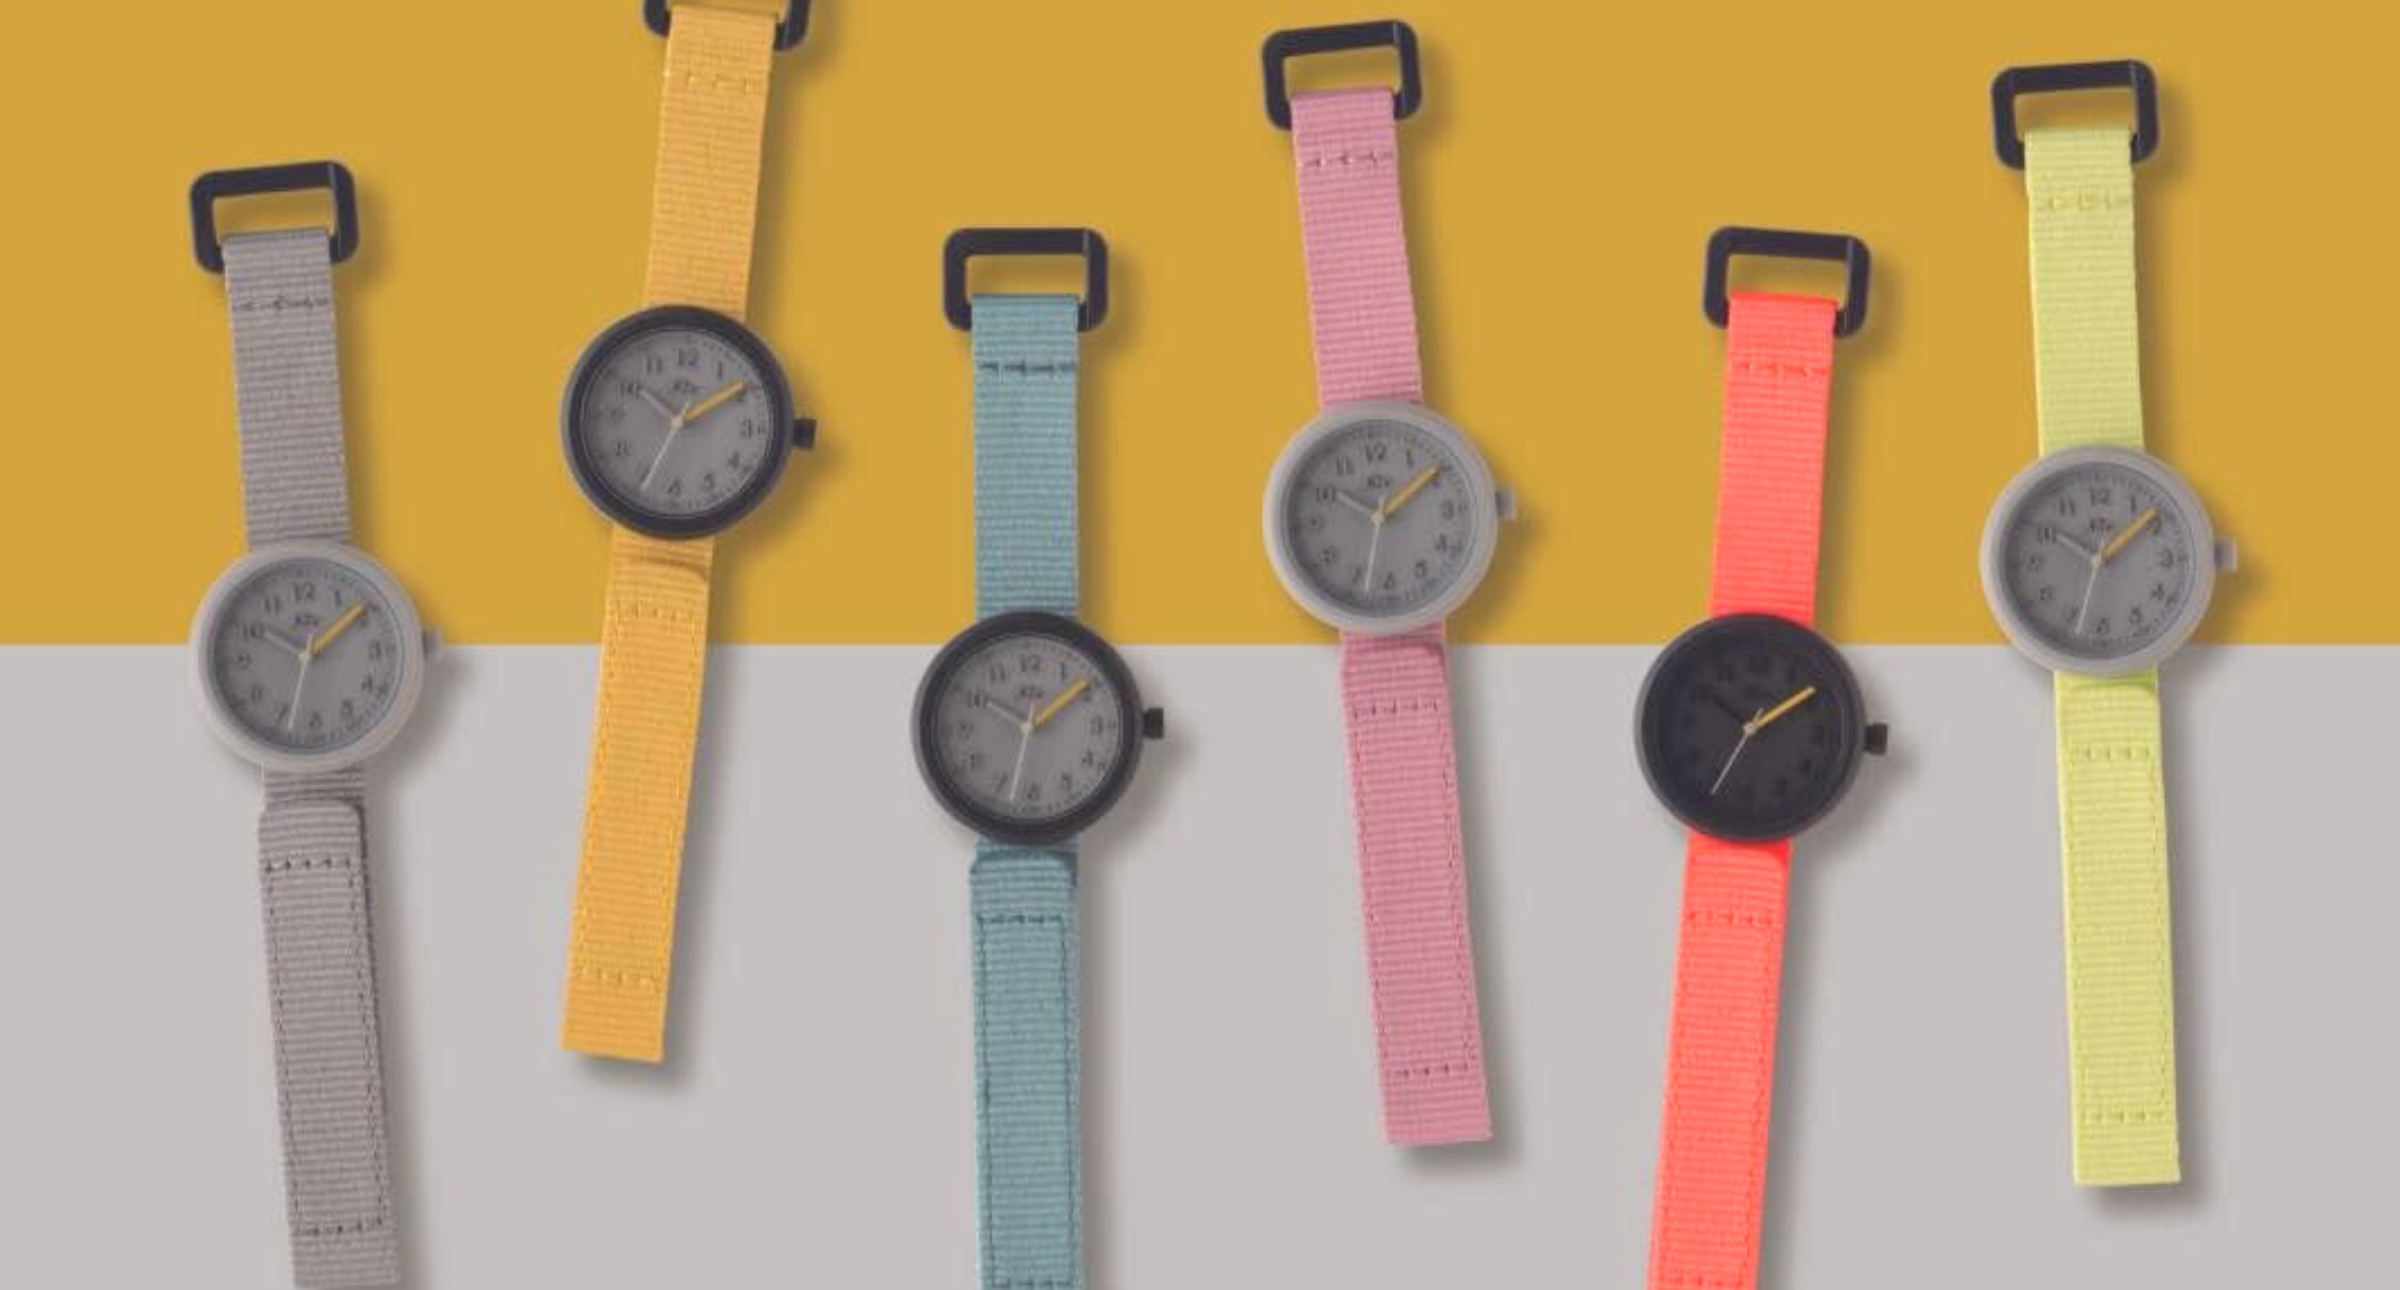 【#Environment】日本YOT WATCH 手錶回收舊玩具創新再製，環保與時尚兼顧展現多變面貌